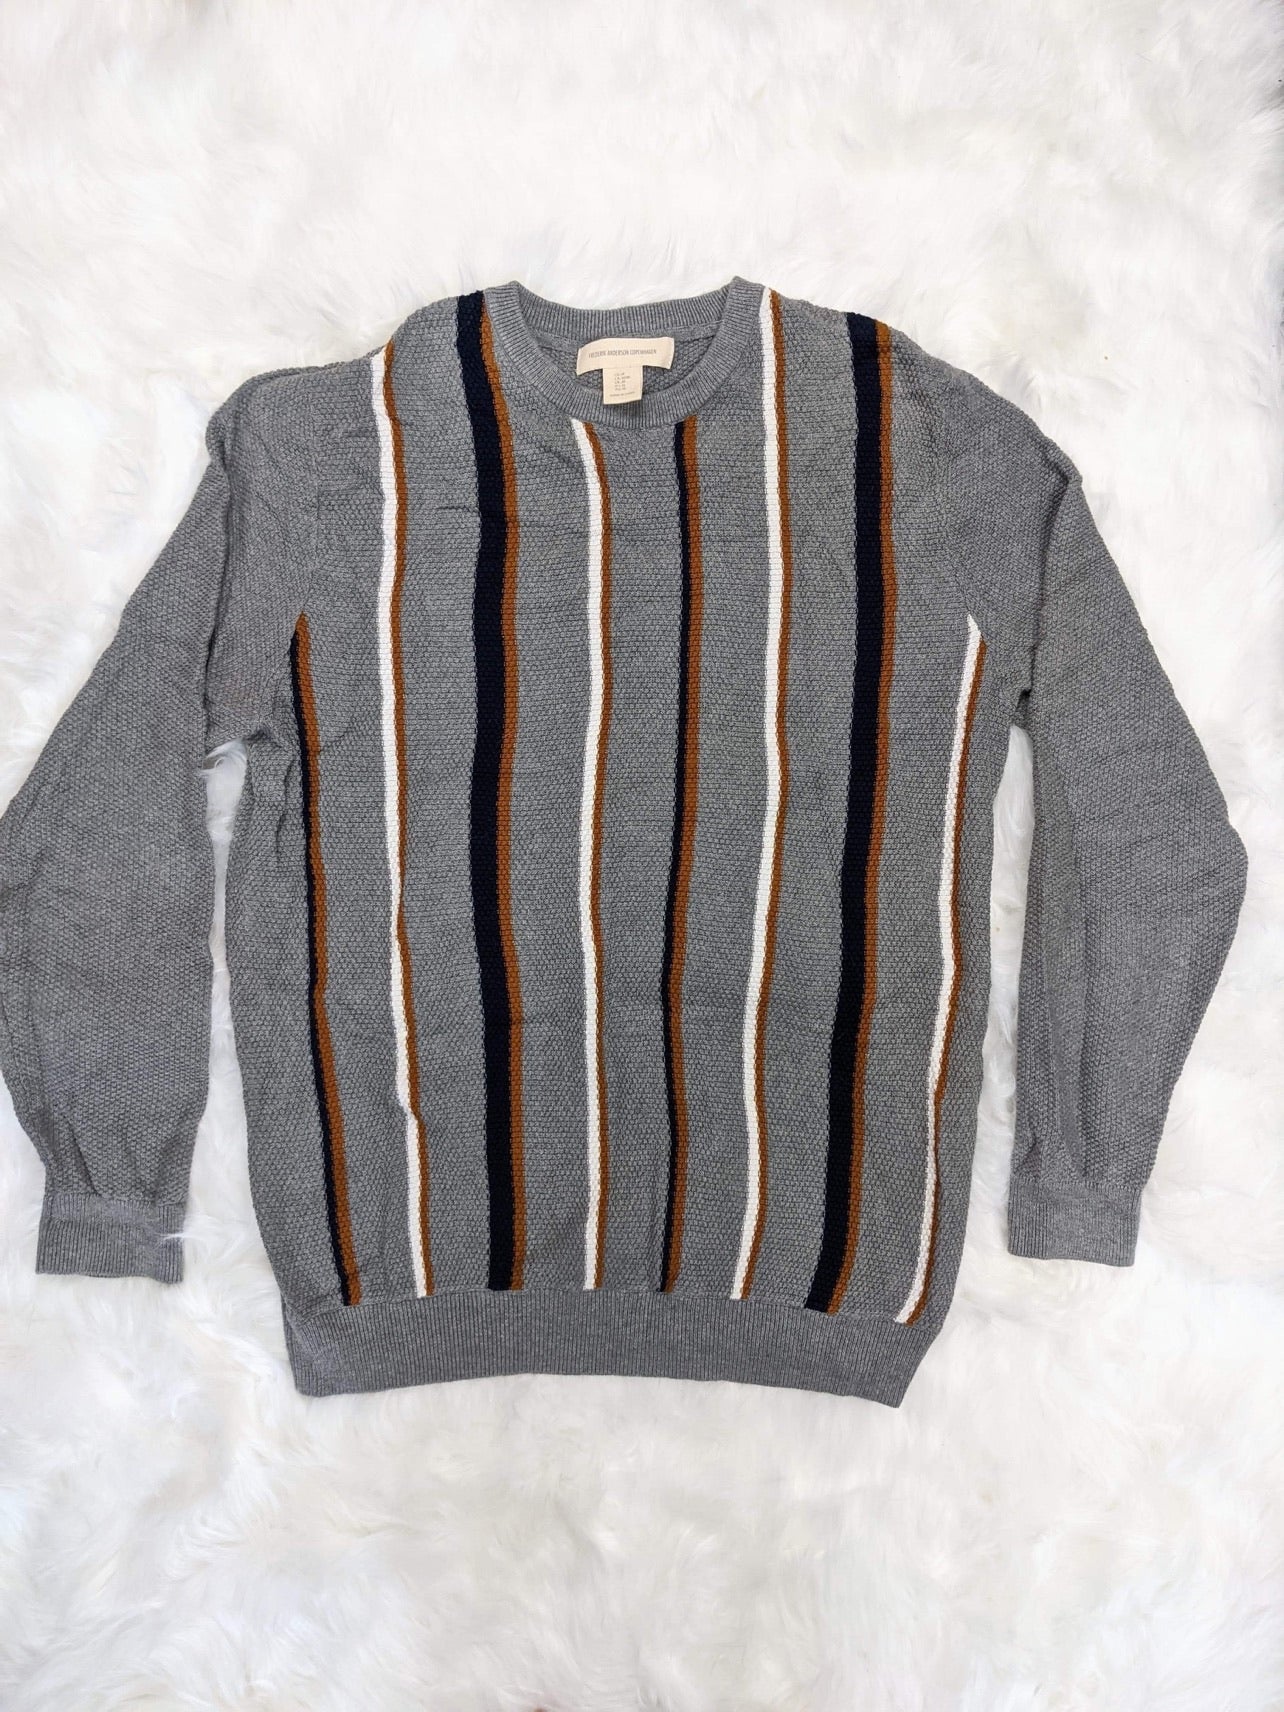 Mens cotton sweater stripes 60s style retro 